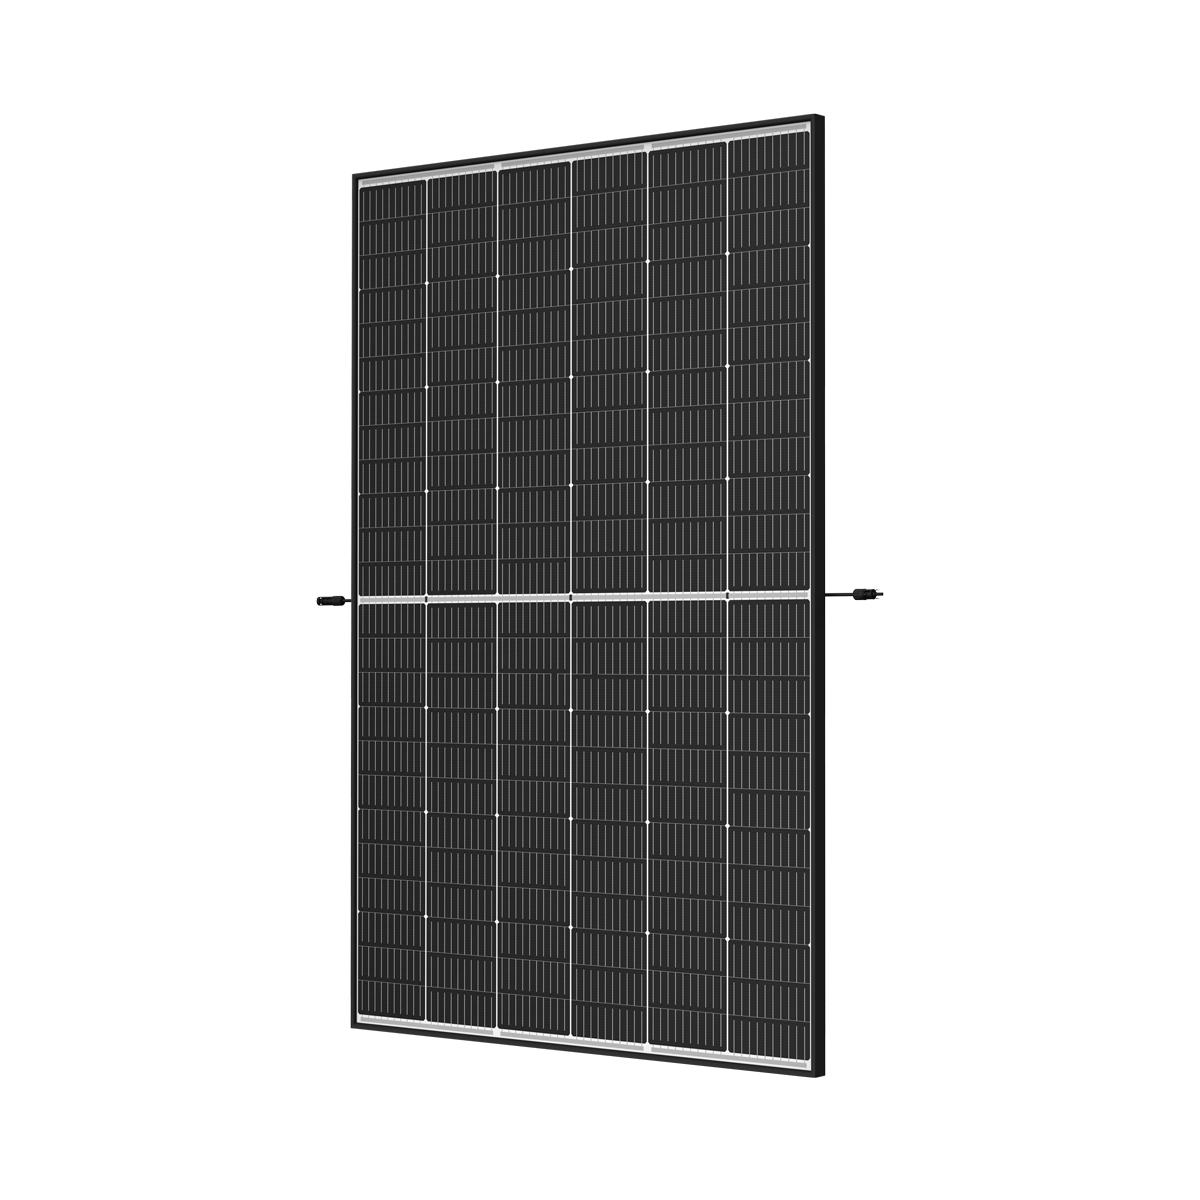 435W Trina Vertex S+ glass glass solar module BLACK FRAME